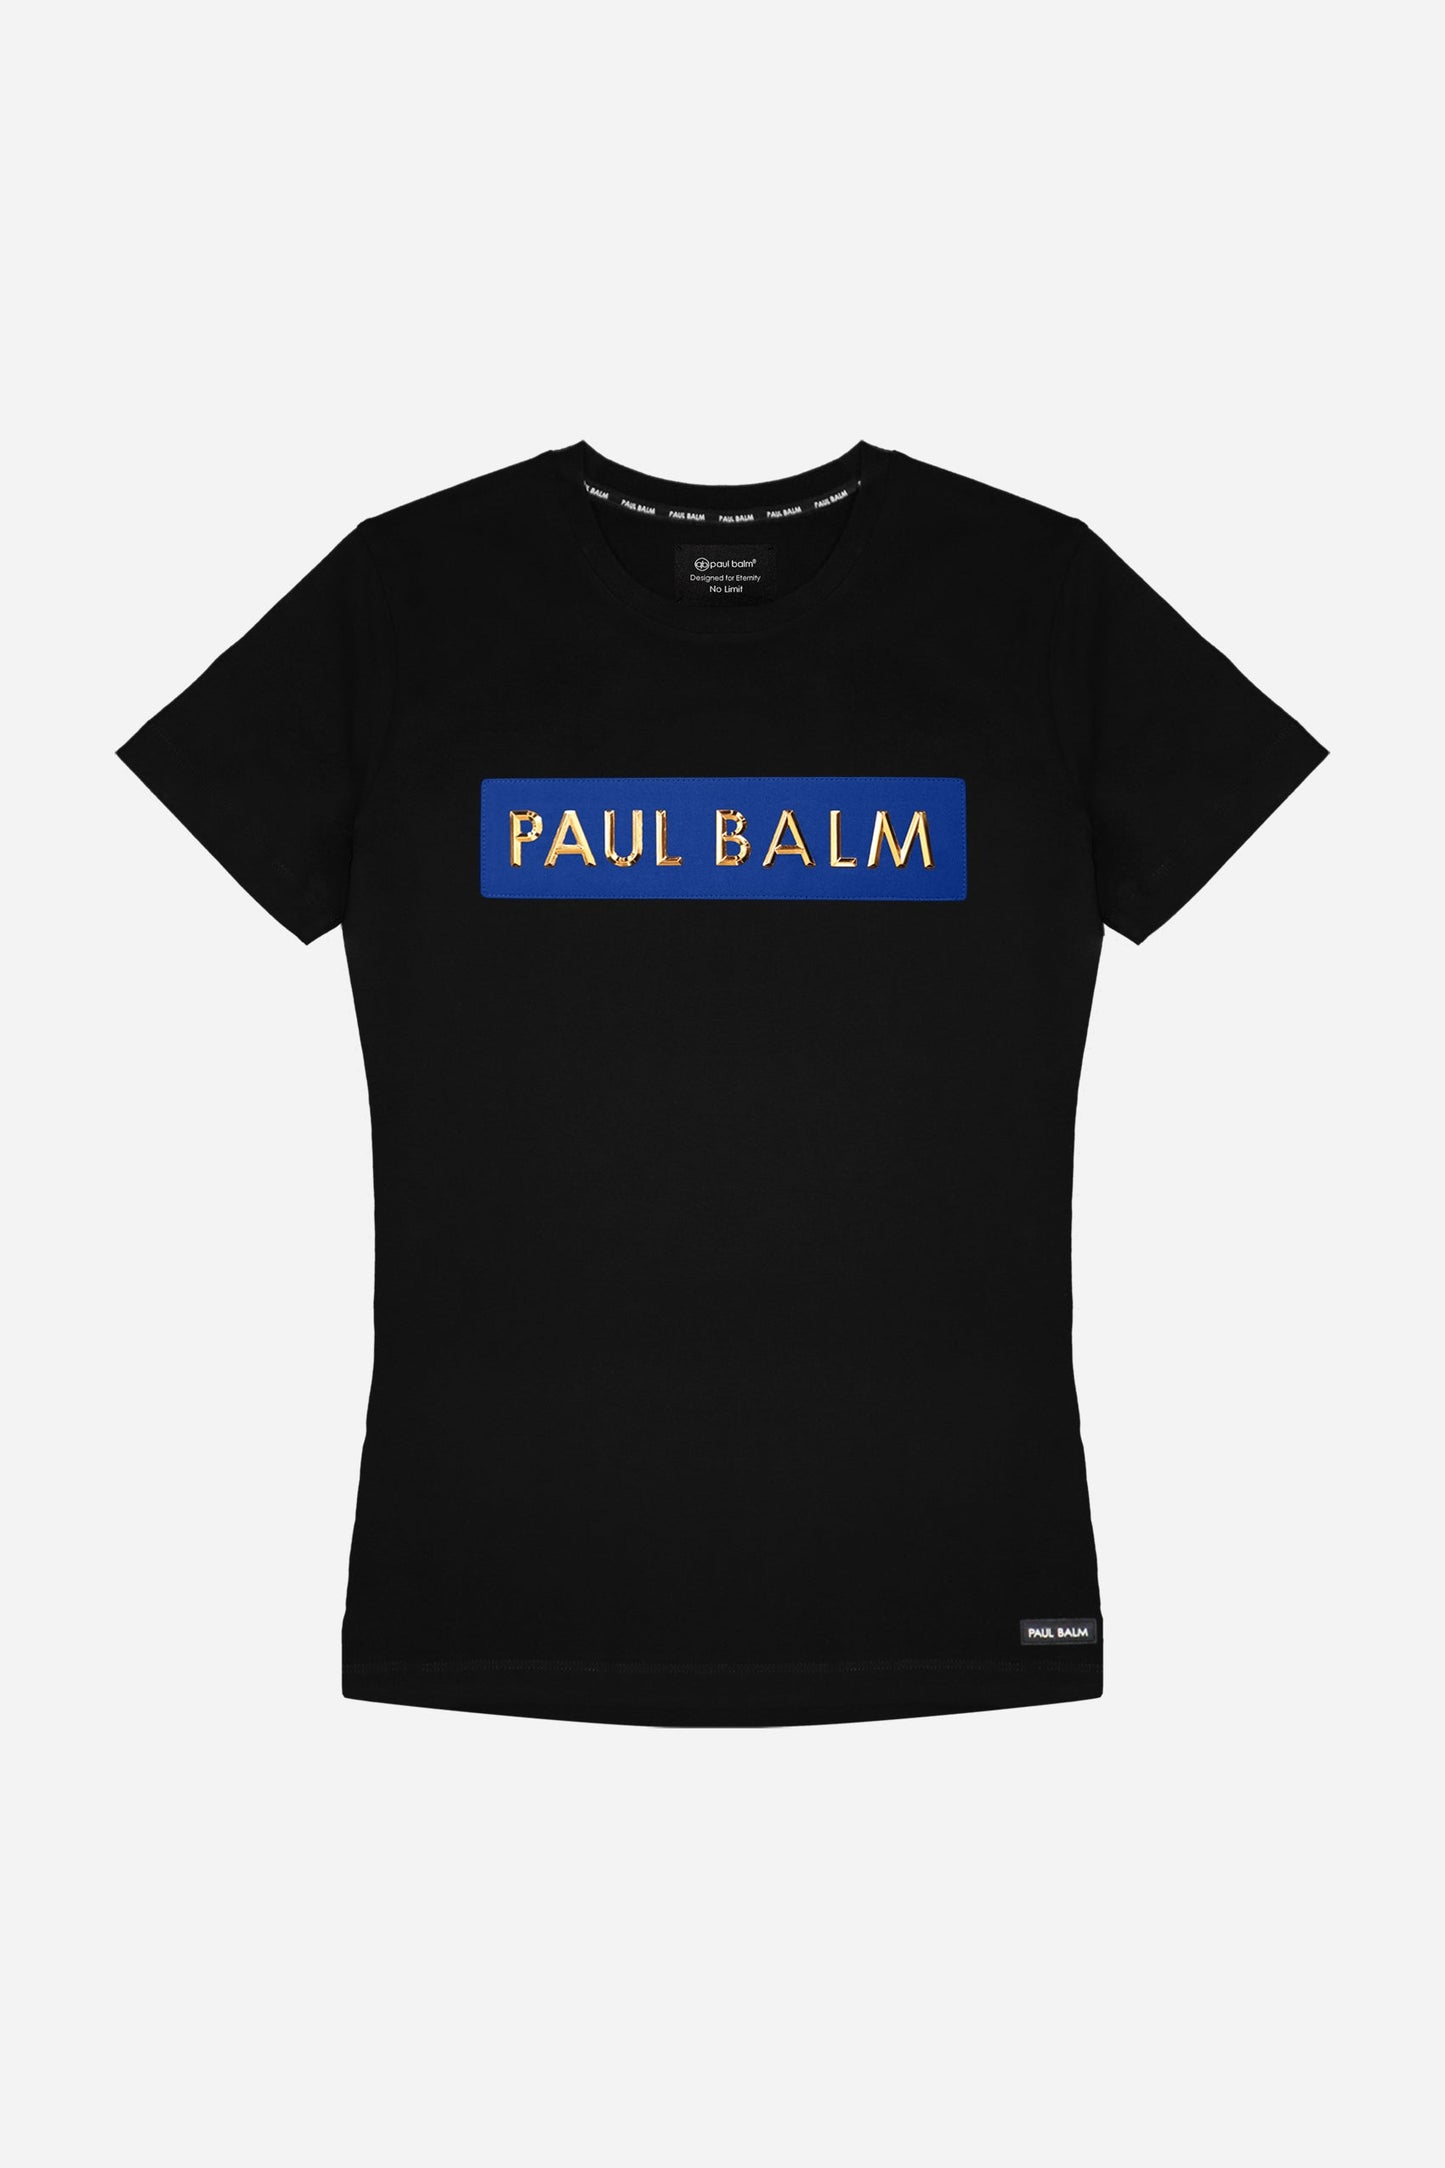 PAUL BALM Metal Patch gold/blue Tshirt